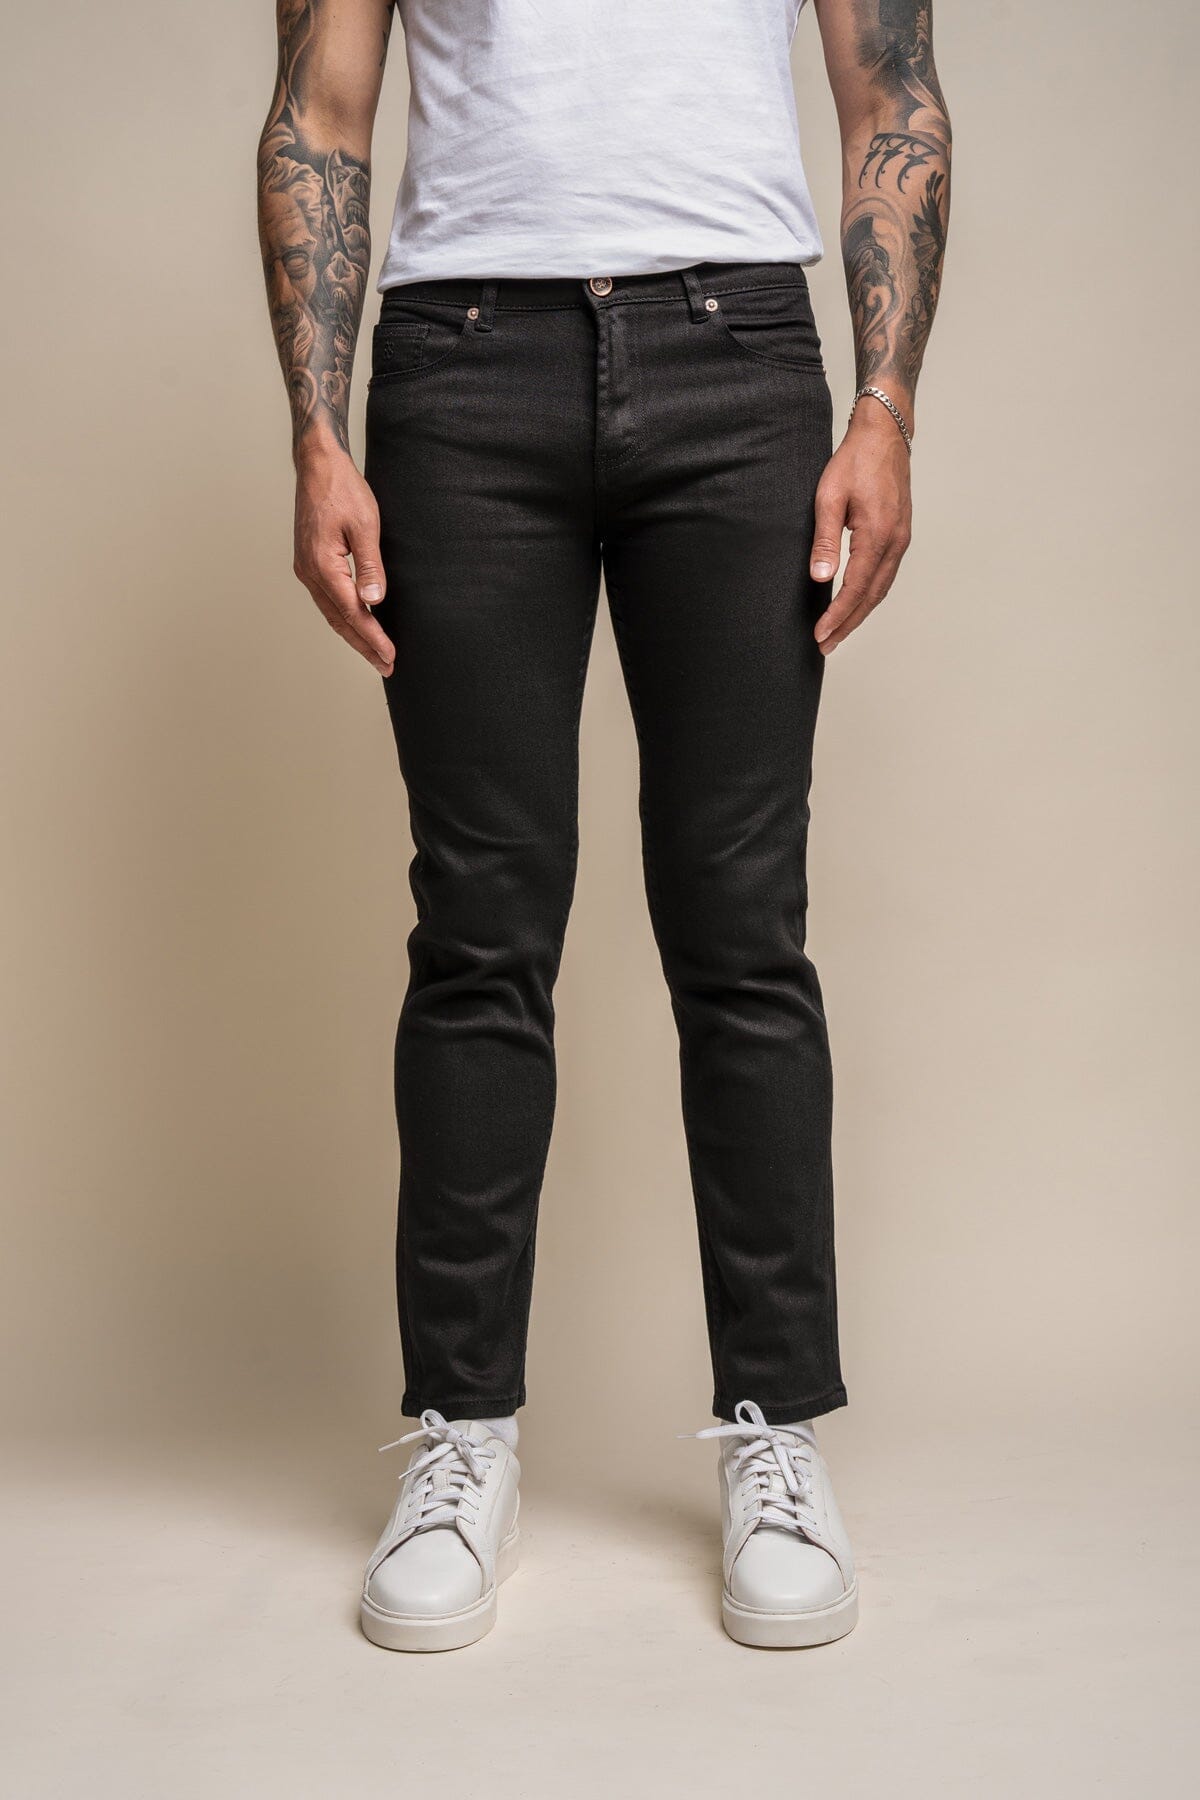 Milano Black Stretch Denim Jeans - Jeans - 30S 